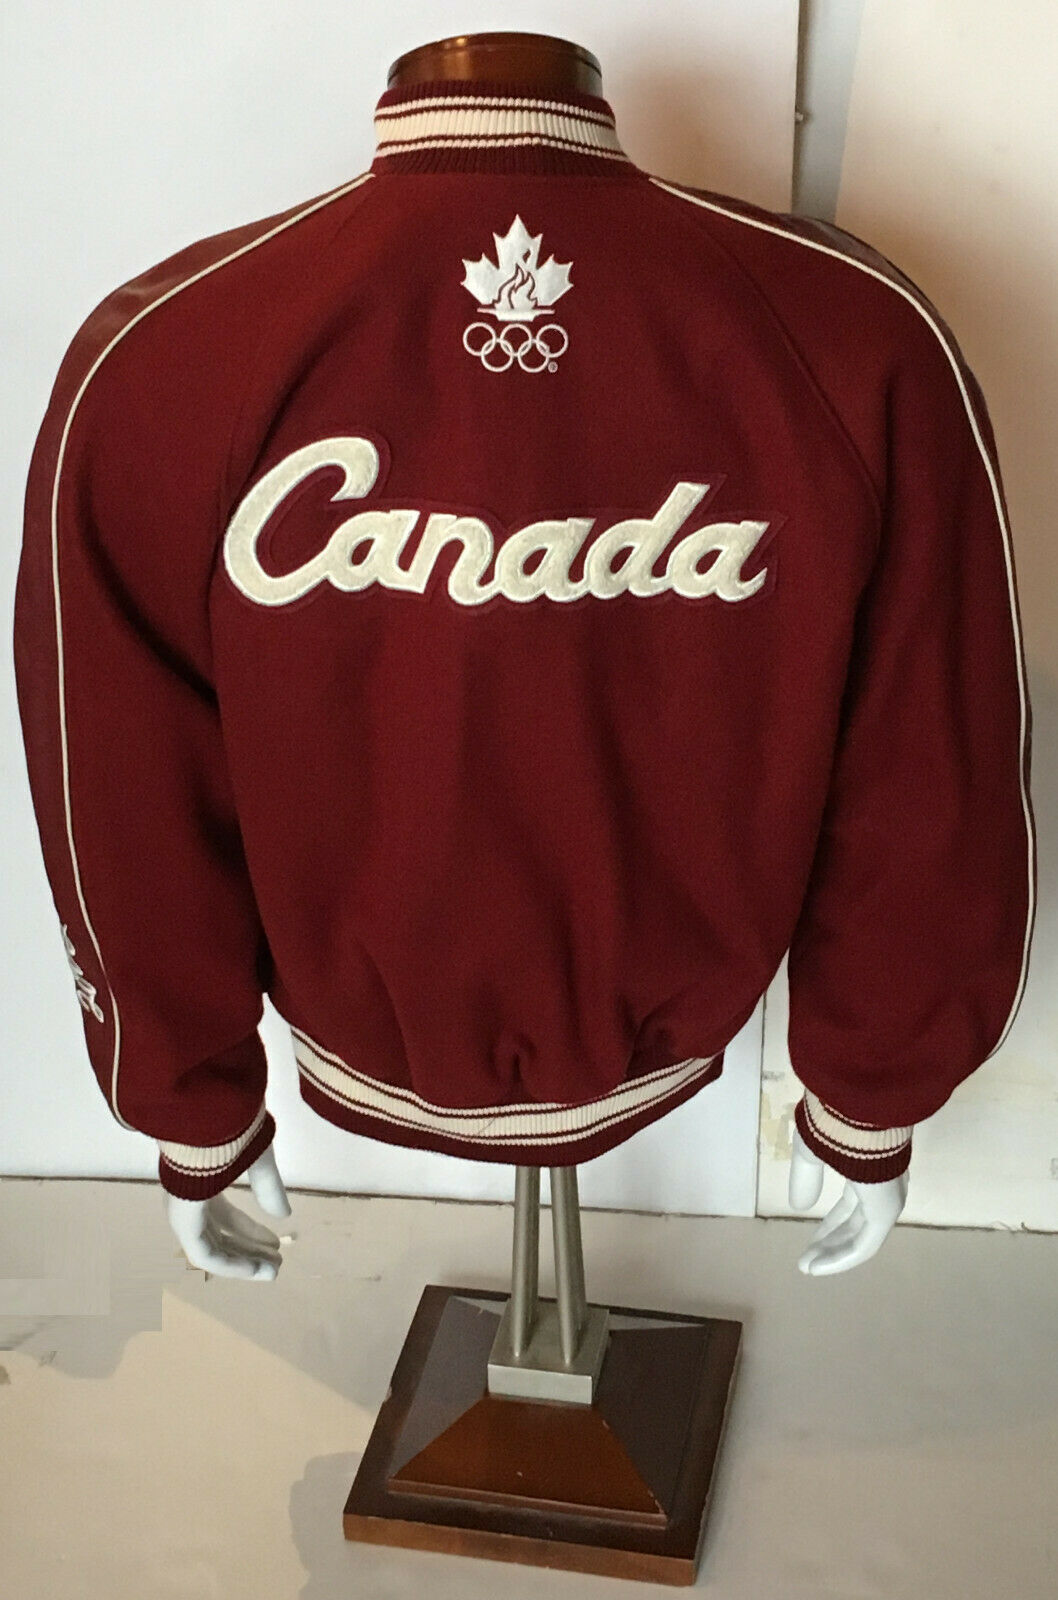 Wayne Gretzky Signed LE Team Canada Jersey (UDA COA)